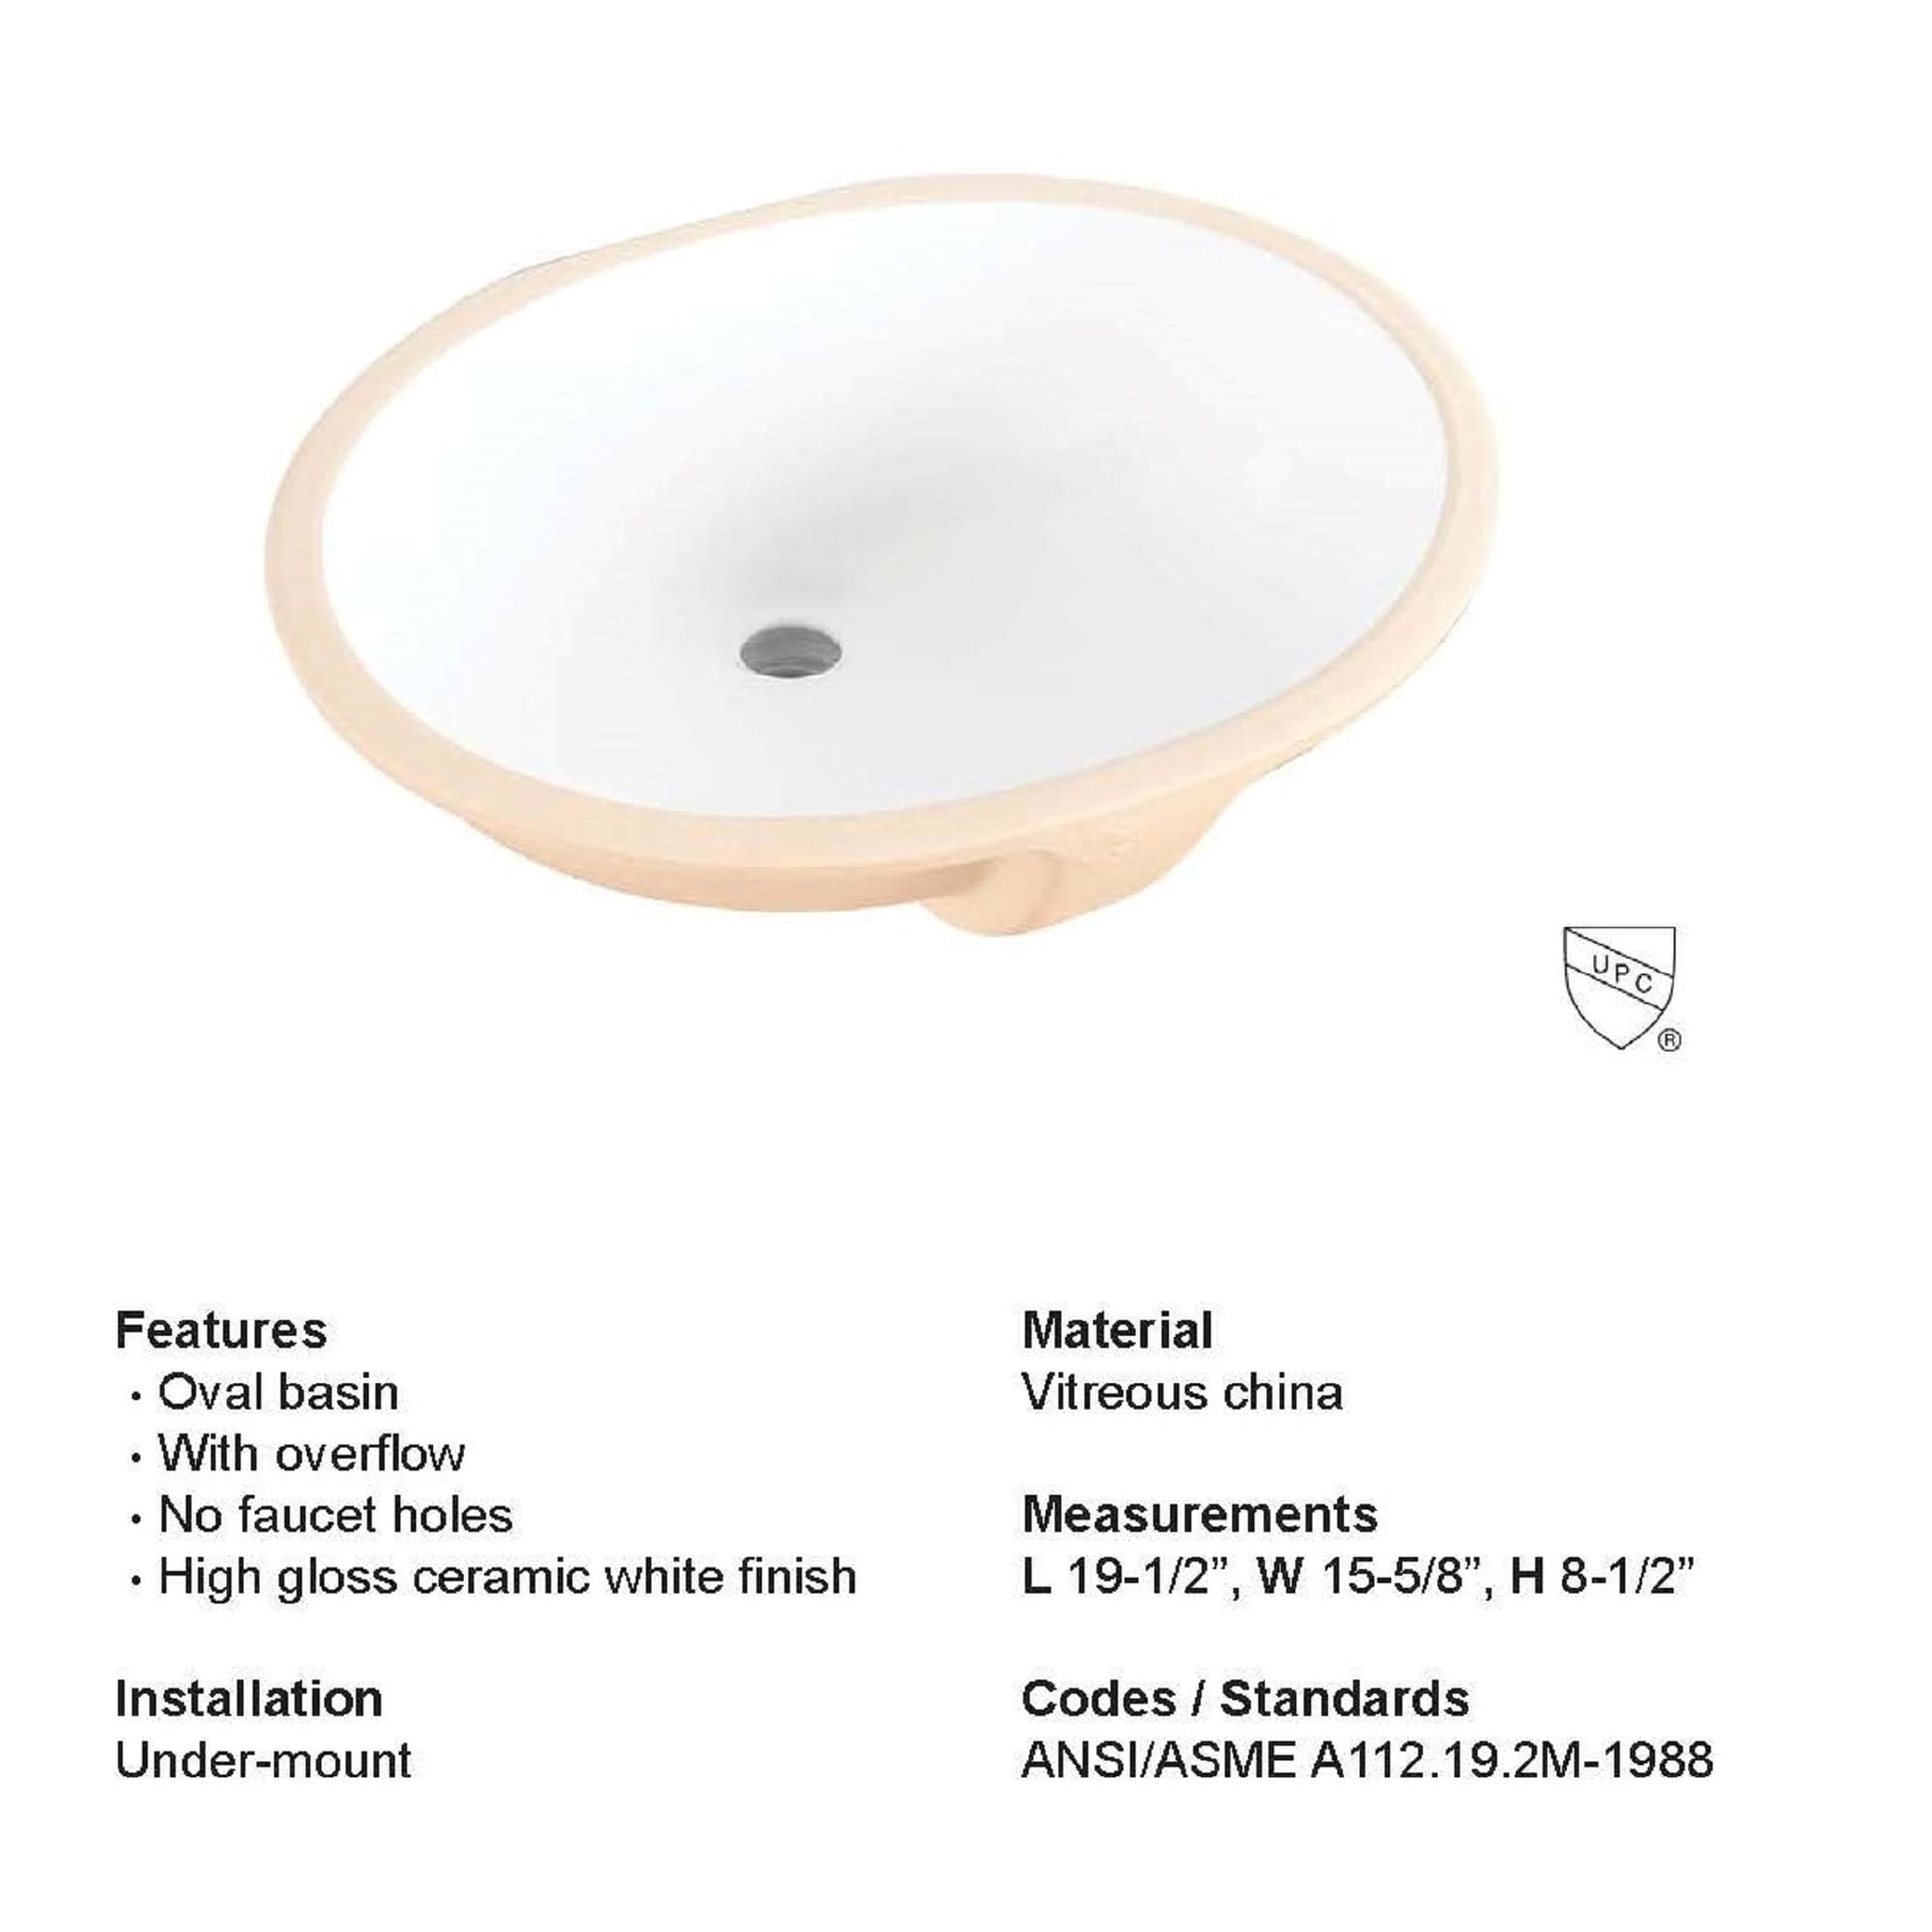 GhomeG 19x16 Undermountl Vessel Sink White Oval Porcelain Ceramic Lavatory Vanity Sink with Overflow Oval Bathroom Vessel Sink